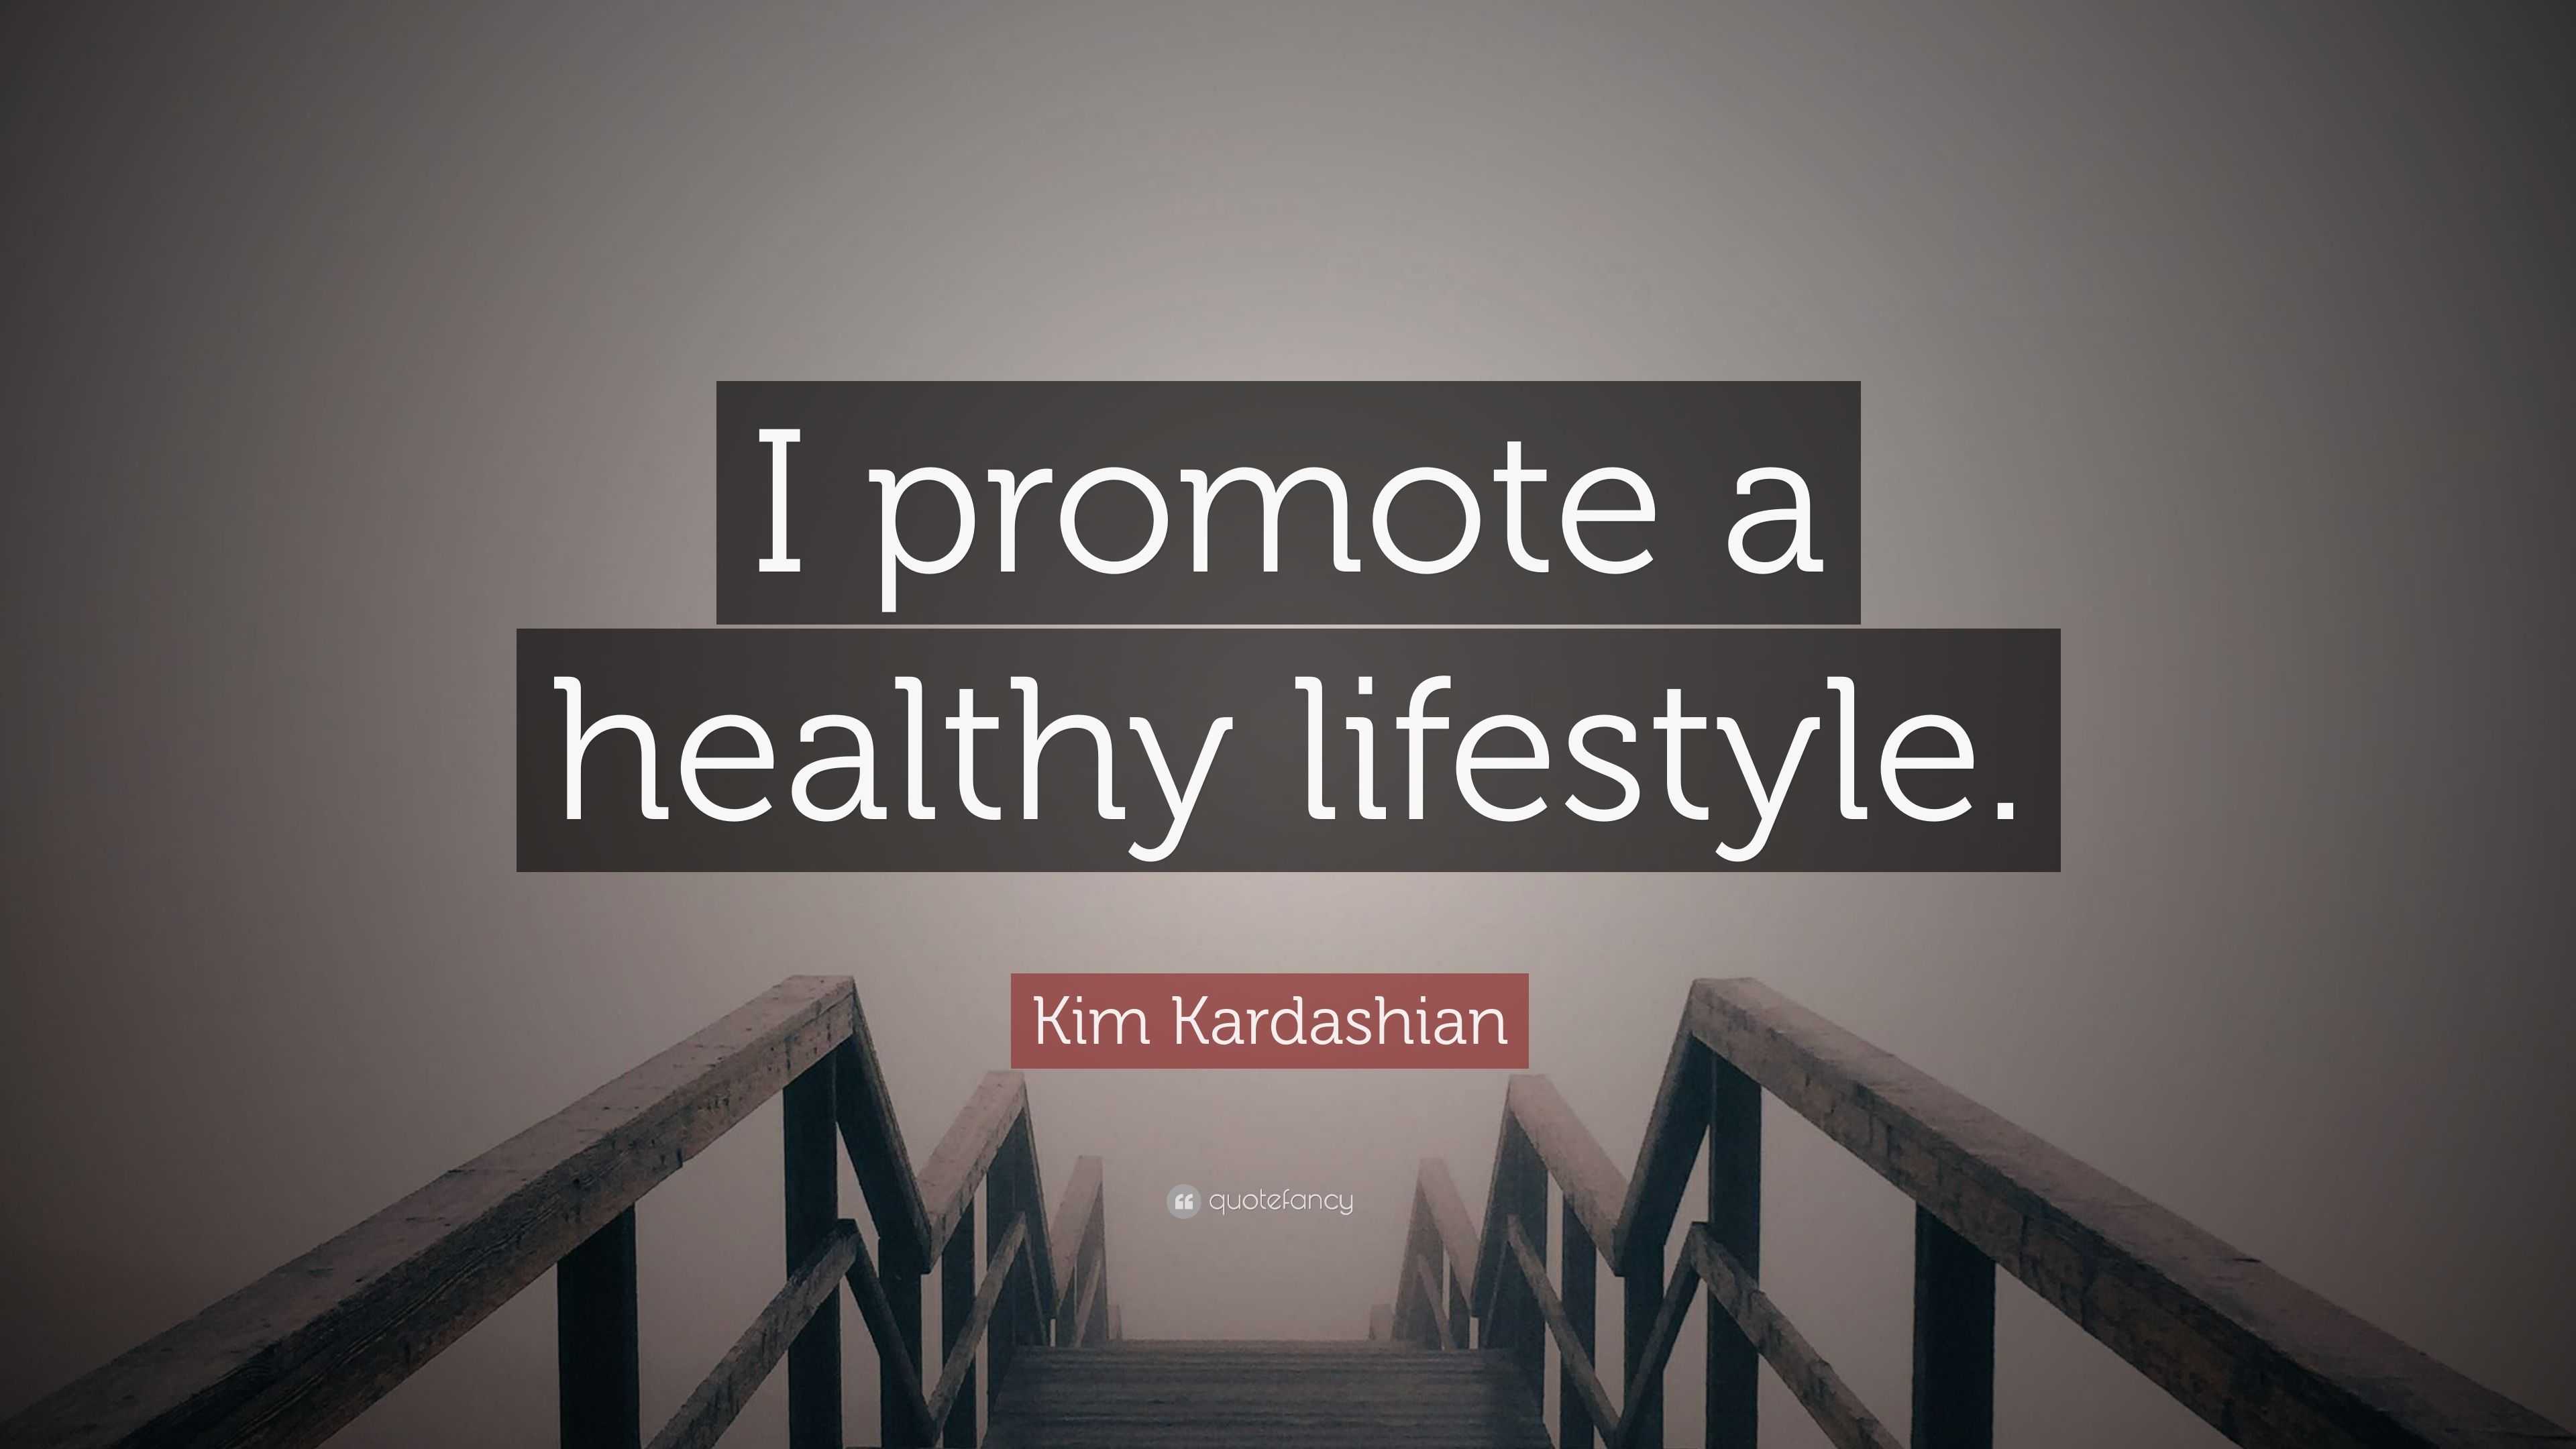 Kim Kardashian Quote: 